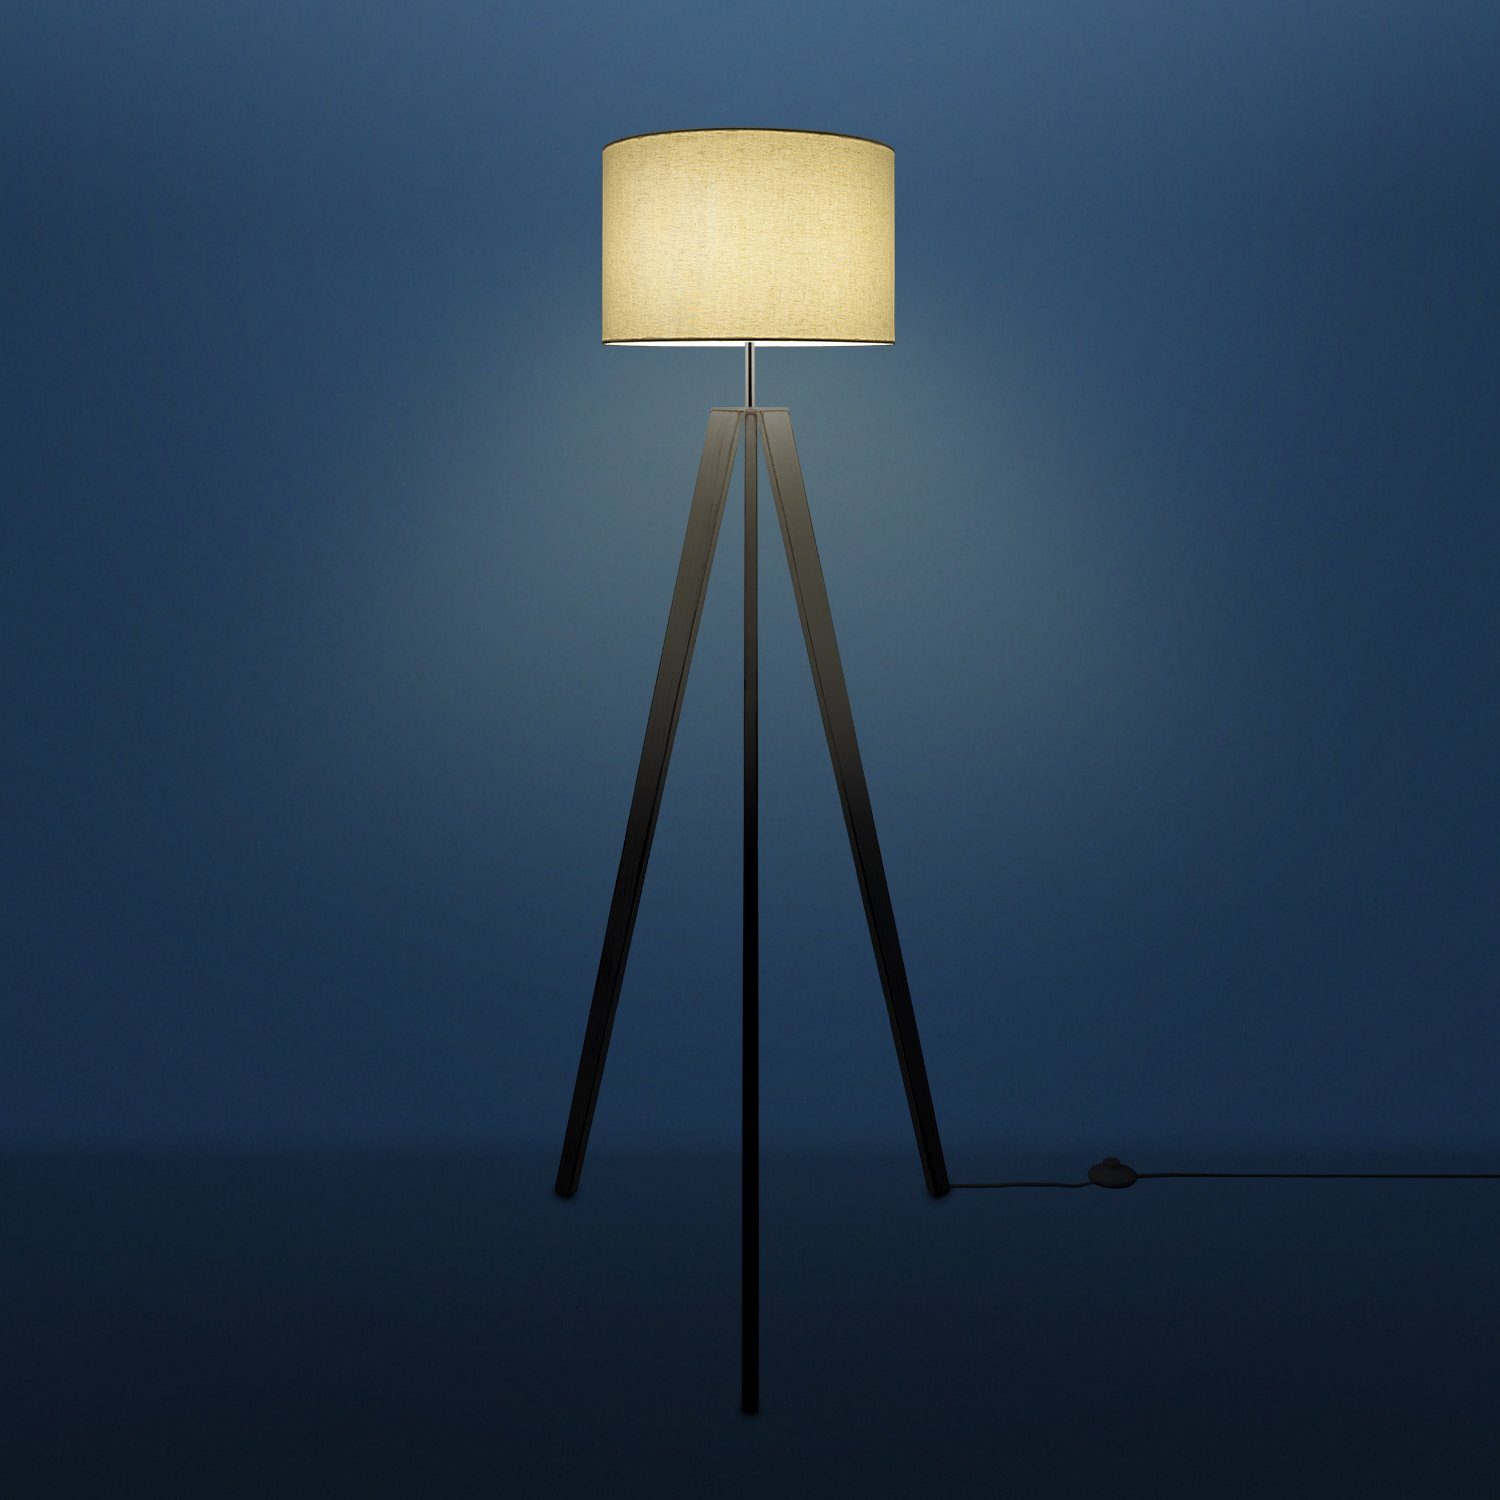 LED Fuß Stehlampe Vintage Stil Color, Paco Lampe Leuchtmittel, Wohnzimmer Home Canvas Stehlampe uni ohne E27 Skandinavischer